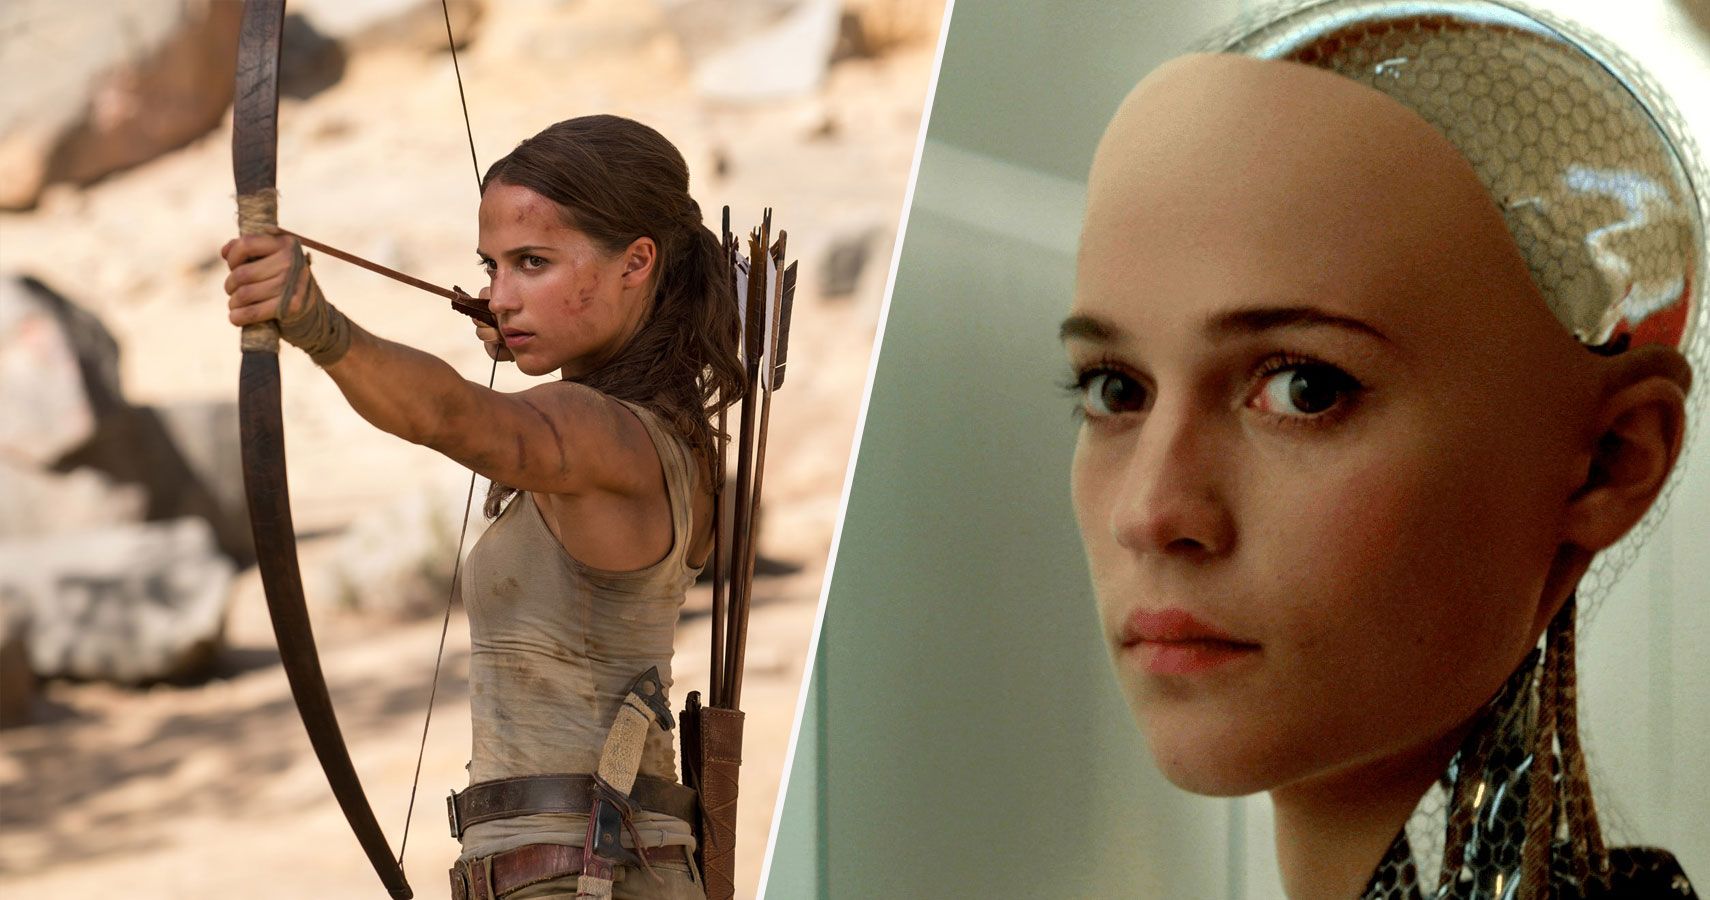 The New 'Tomb Raider' Will Be 'Ex Machina' Breakout Alicia Vikander